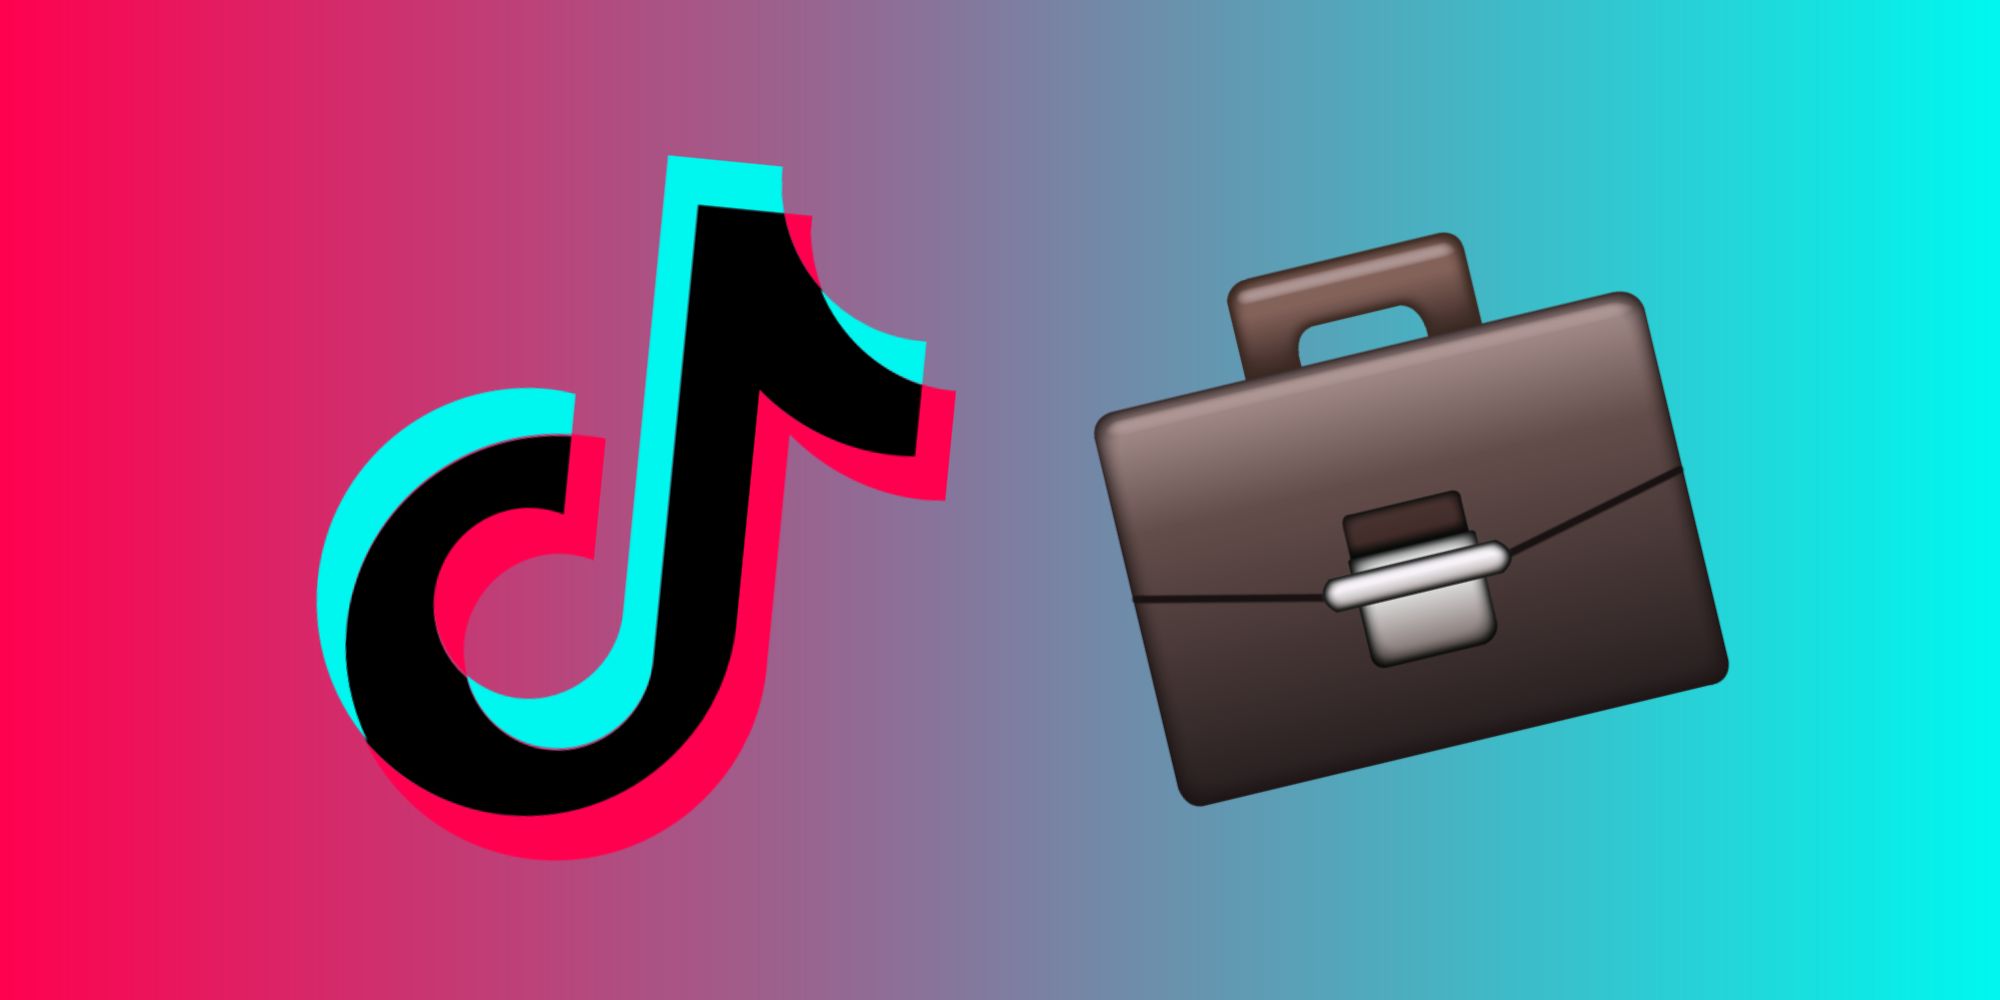 TikTok logo next to a briefcase emoji